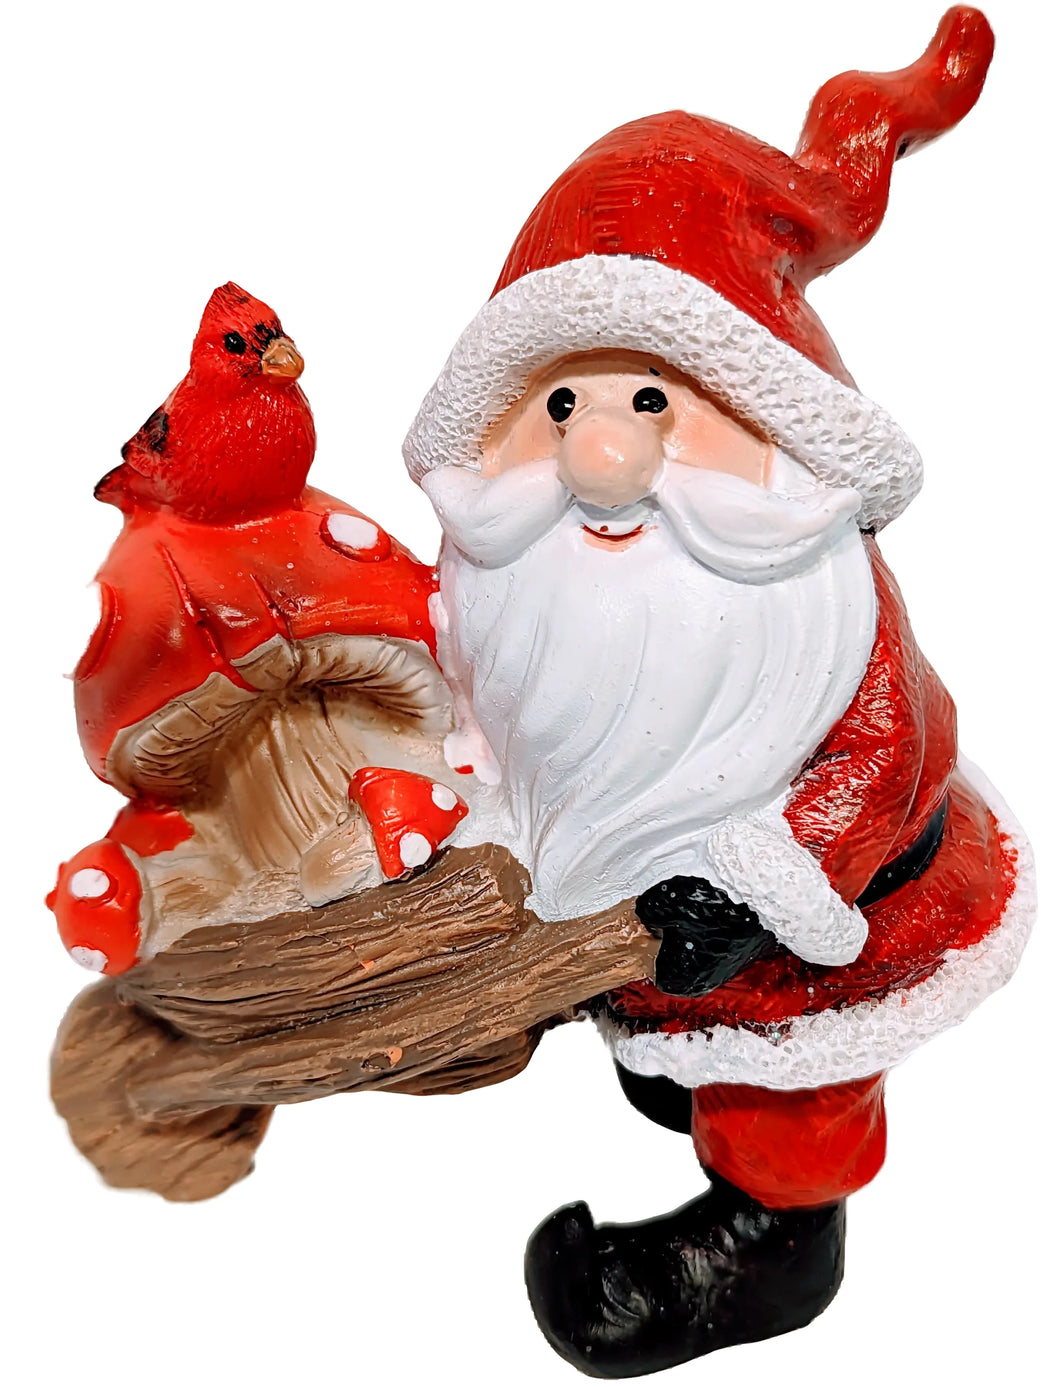 Santa Figurine with Mushroom in Wheel Barrel with Red Cardinal